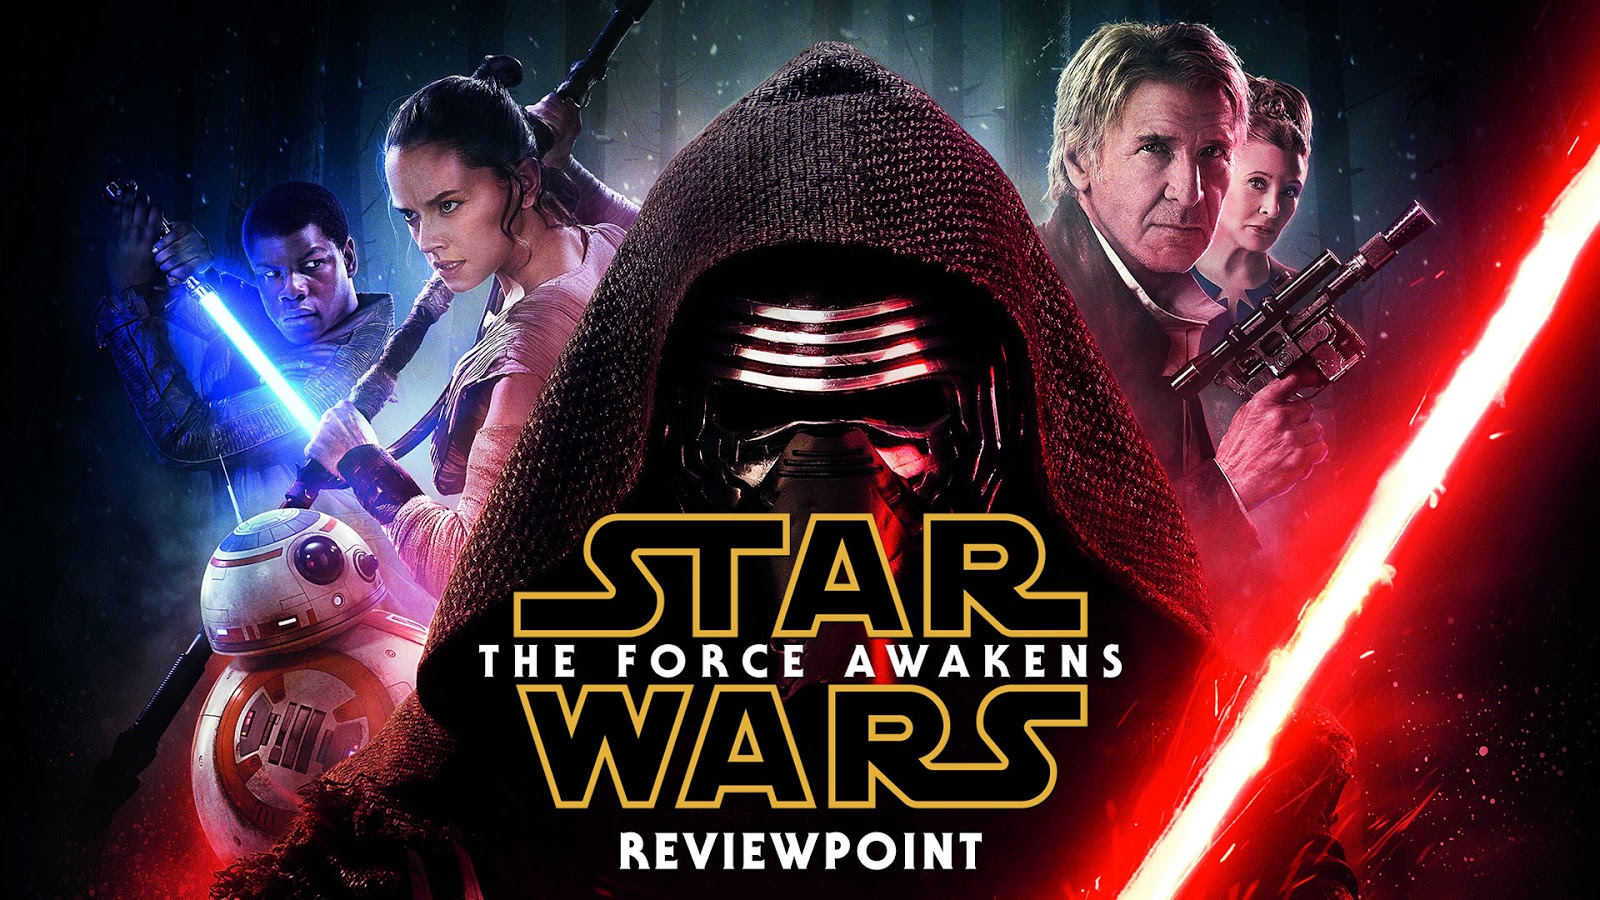 Star Wars Episode VII: The Force Awakens #5